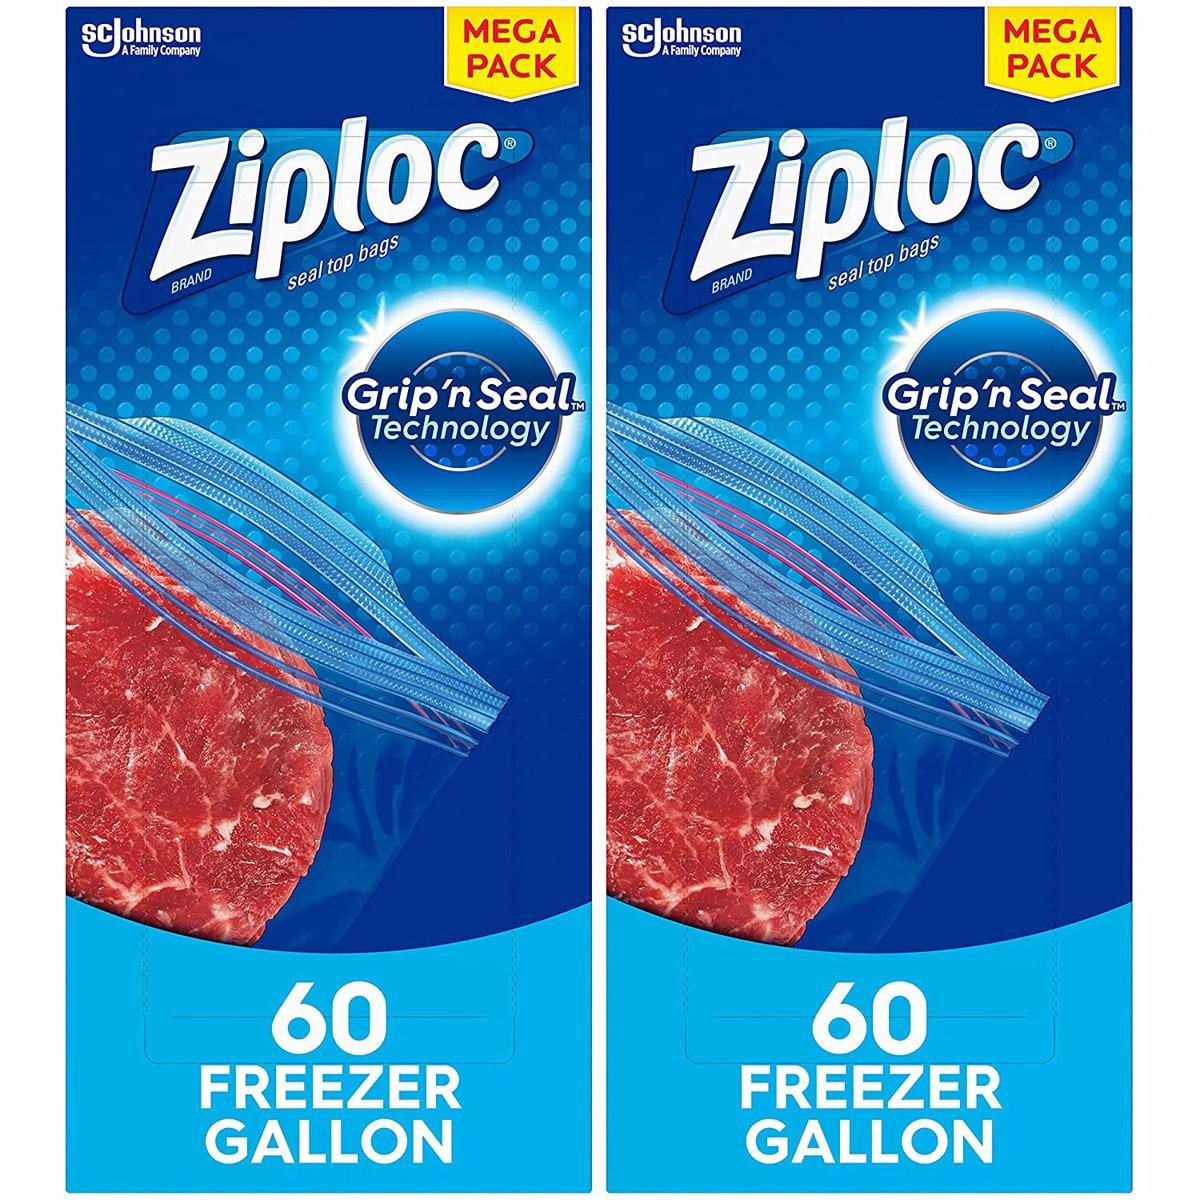 120 Ziploc Food Storage Freezer Bags for $10.50 Shipped